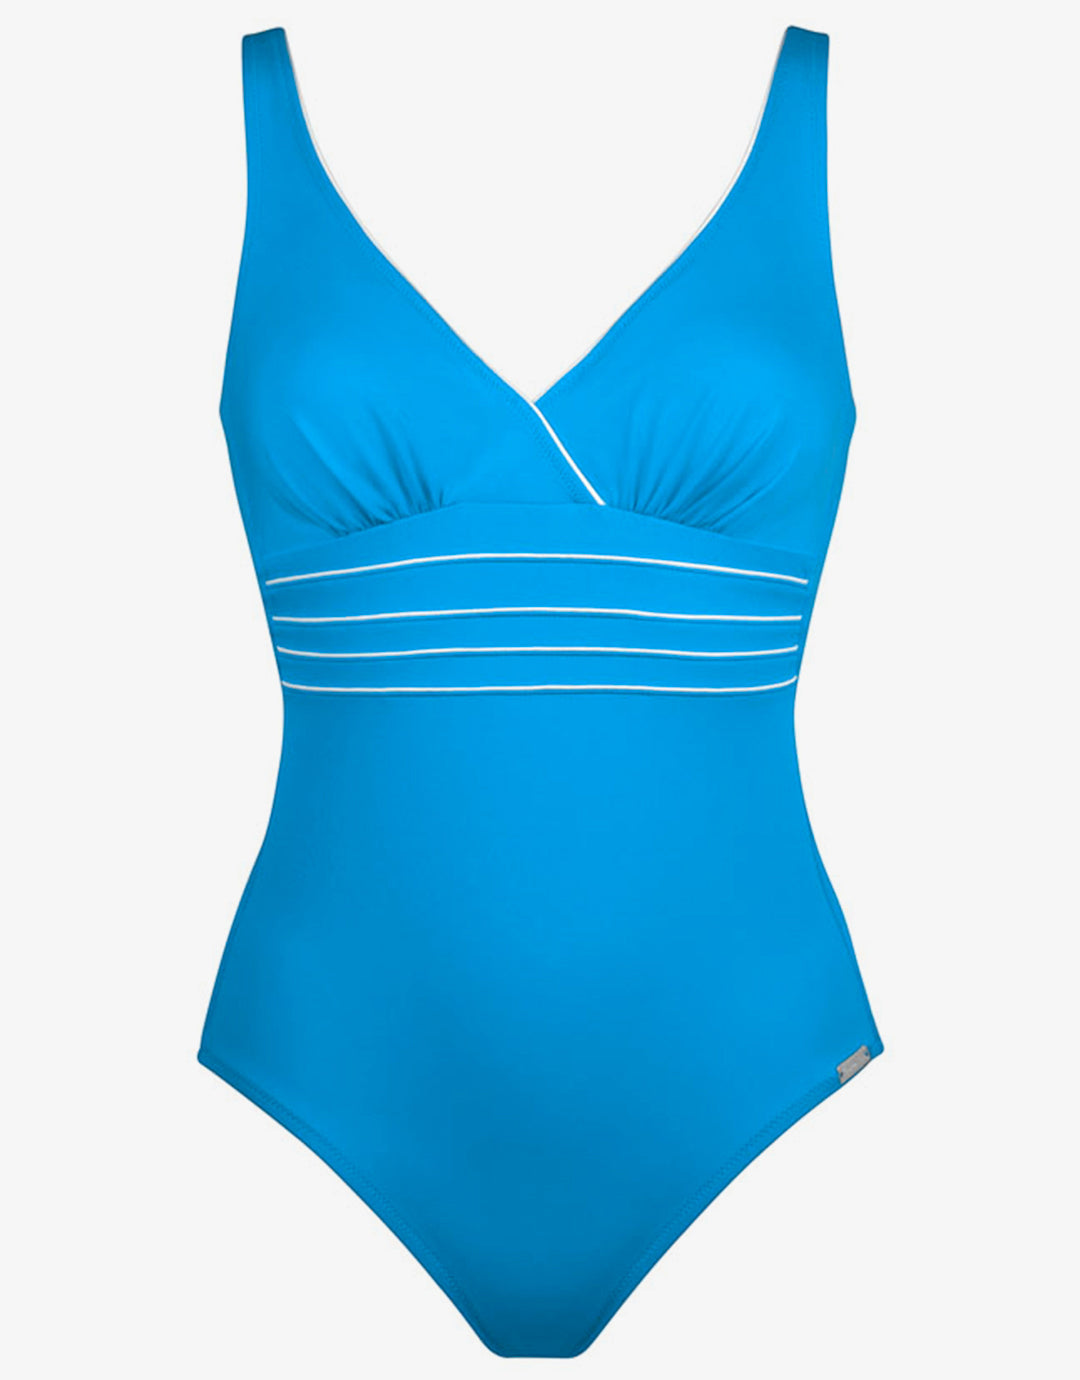 Parrot Bay Swimsuit - Aqua White - Simply Beach UK